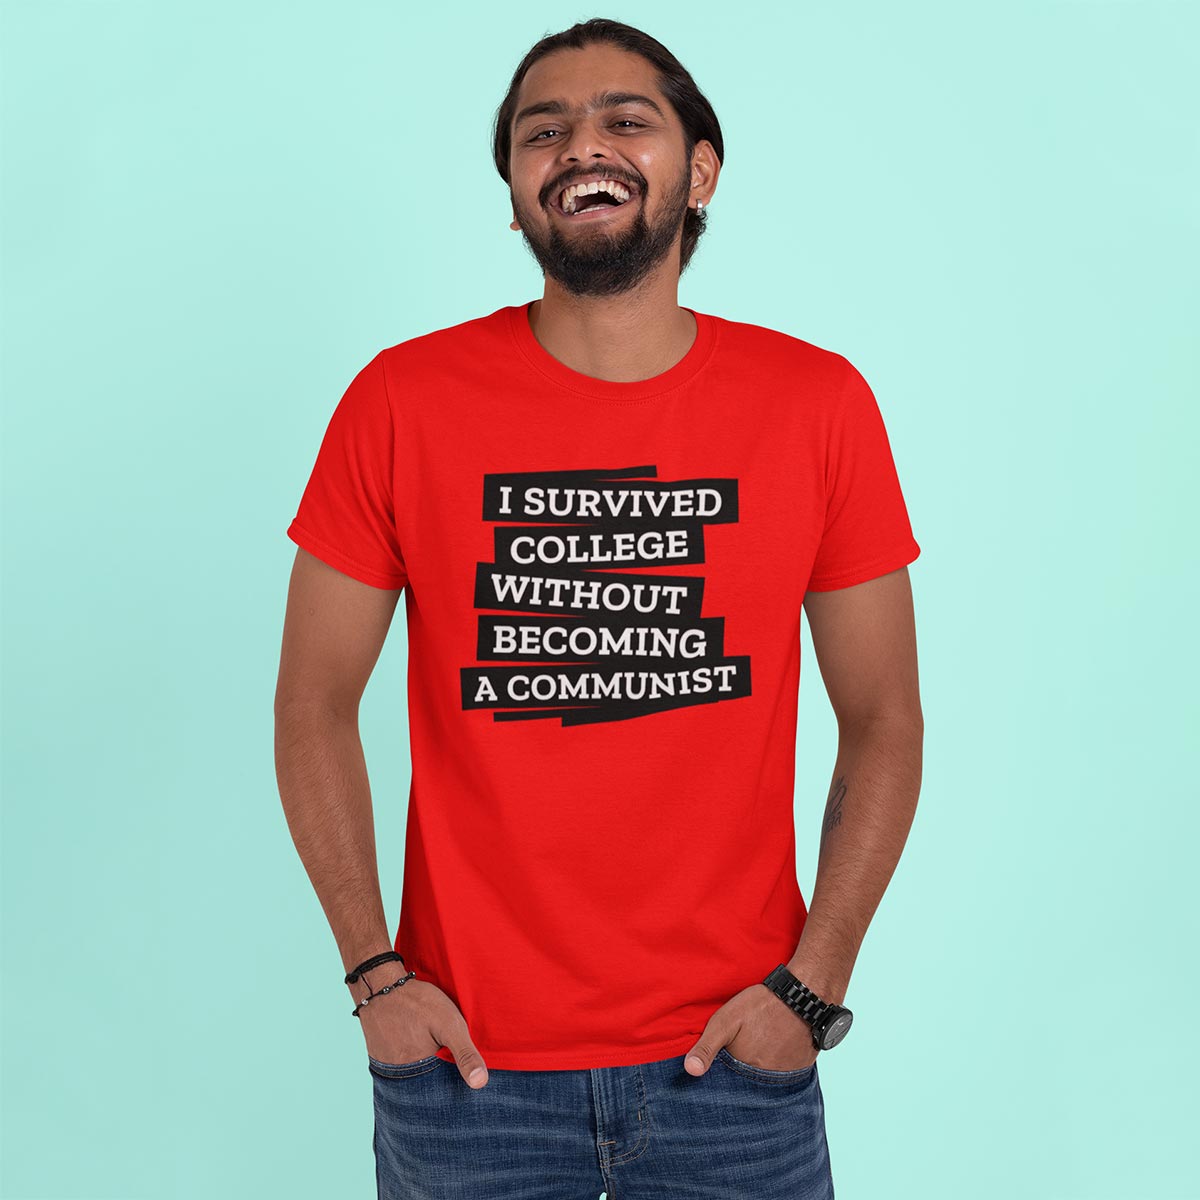 communist t shirt india